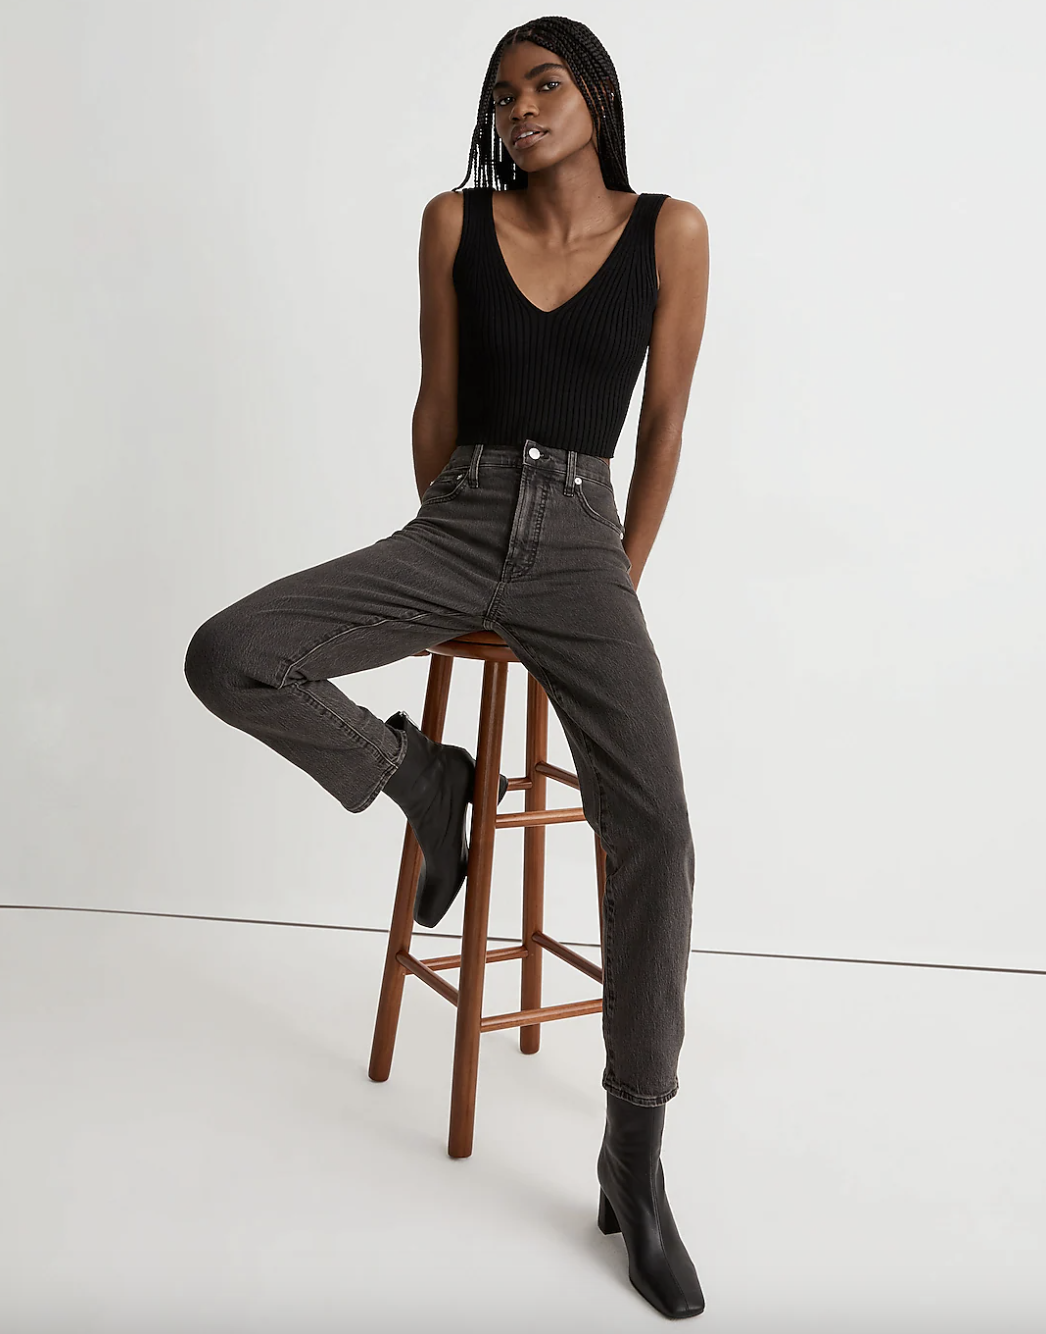 model wearing high rise jeans in black